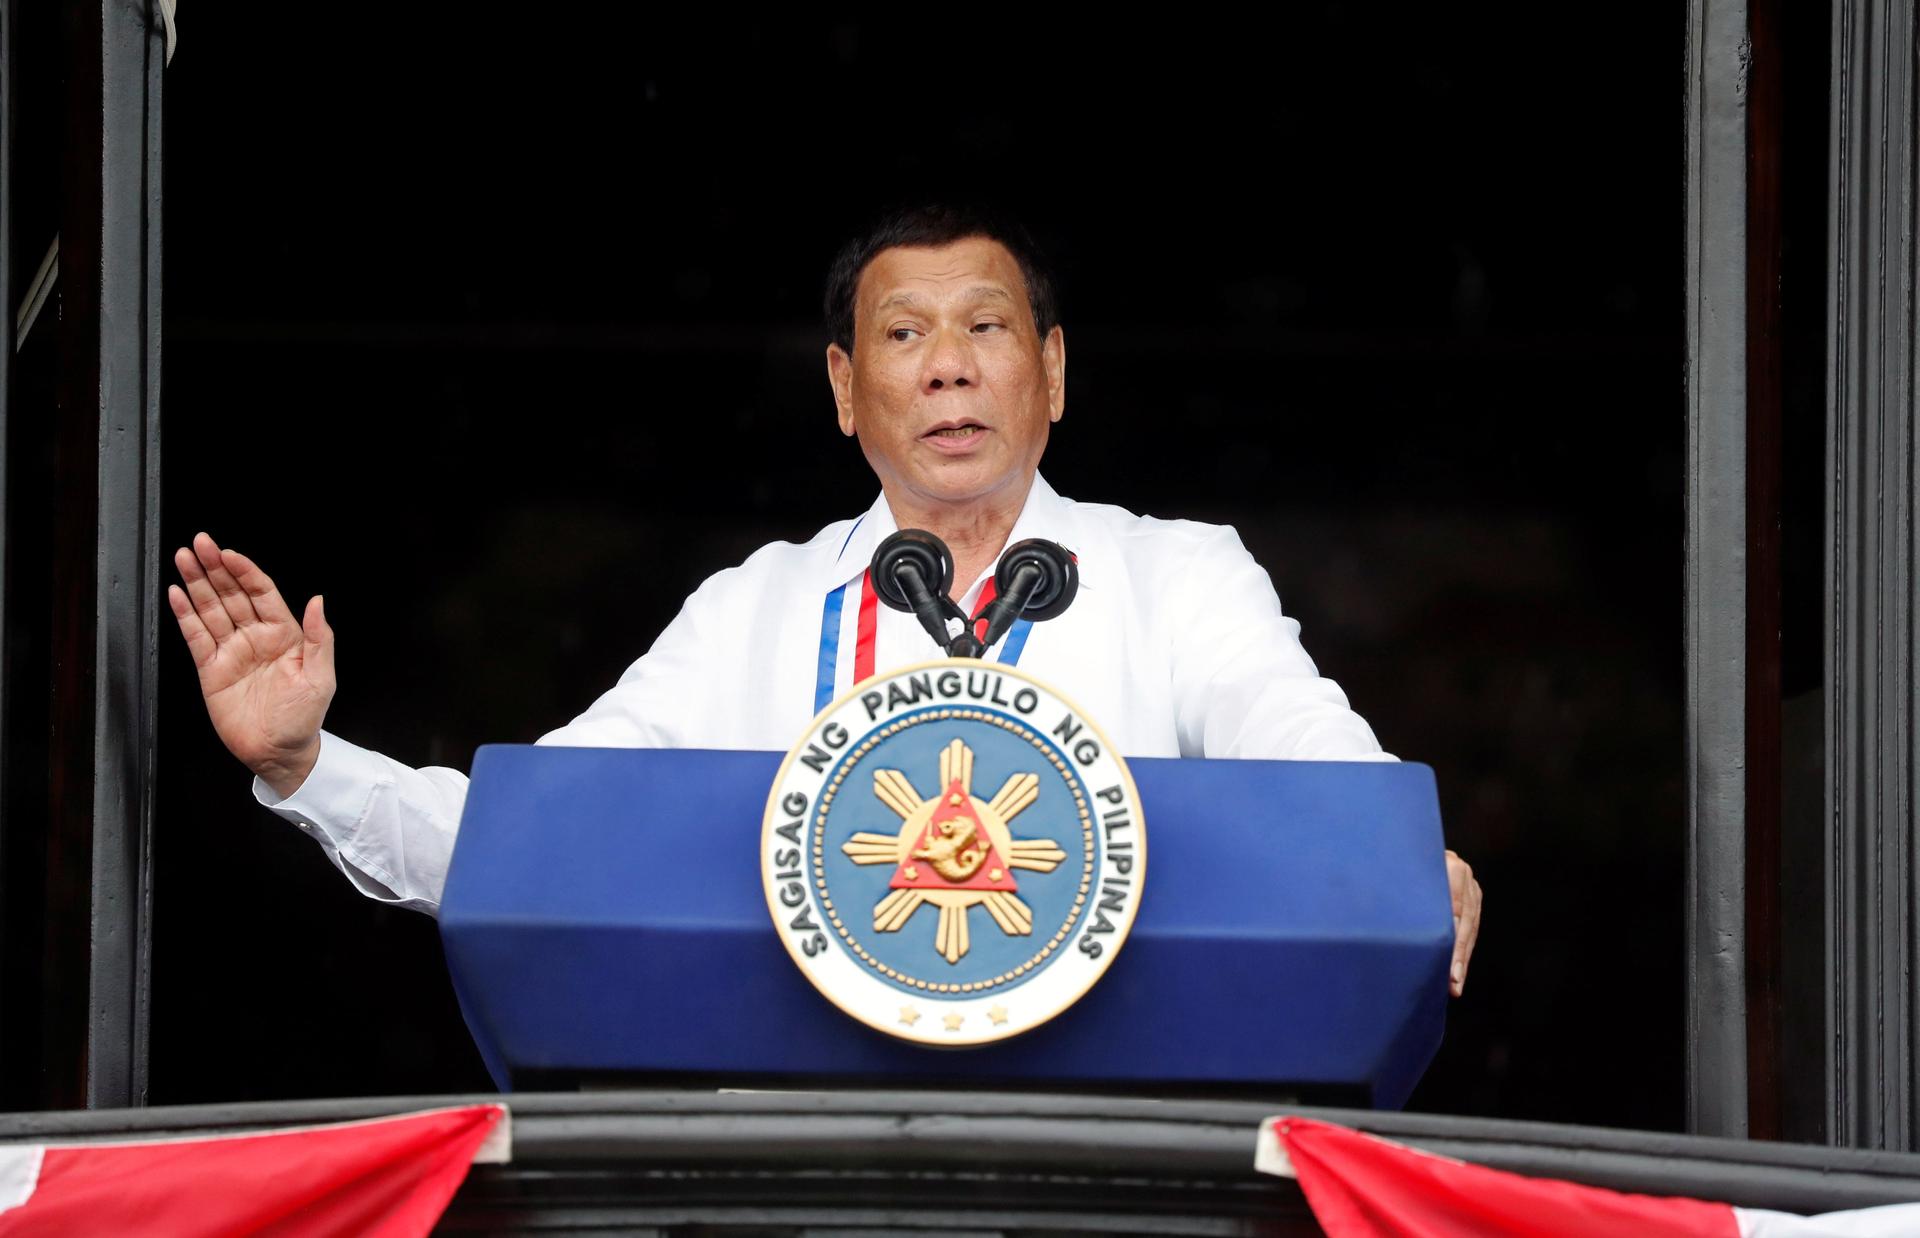 Philippine's President Rodrigo Duterte speaks behind a blue podium in a white shirt 